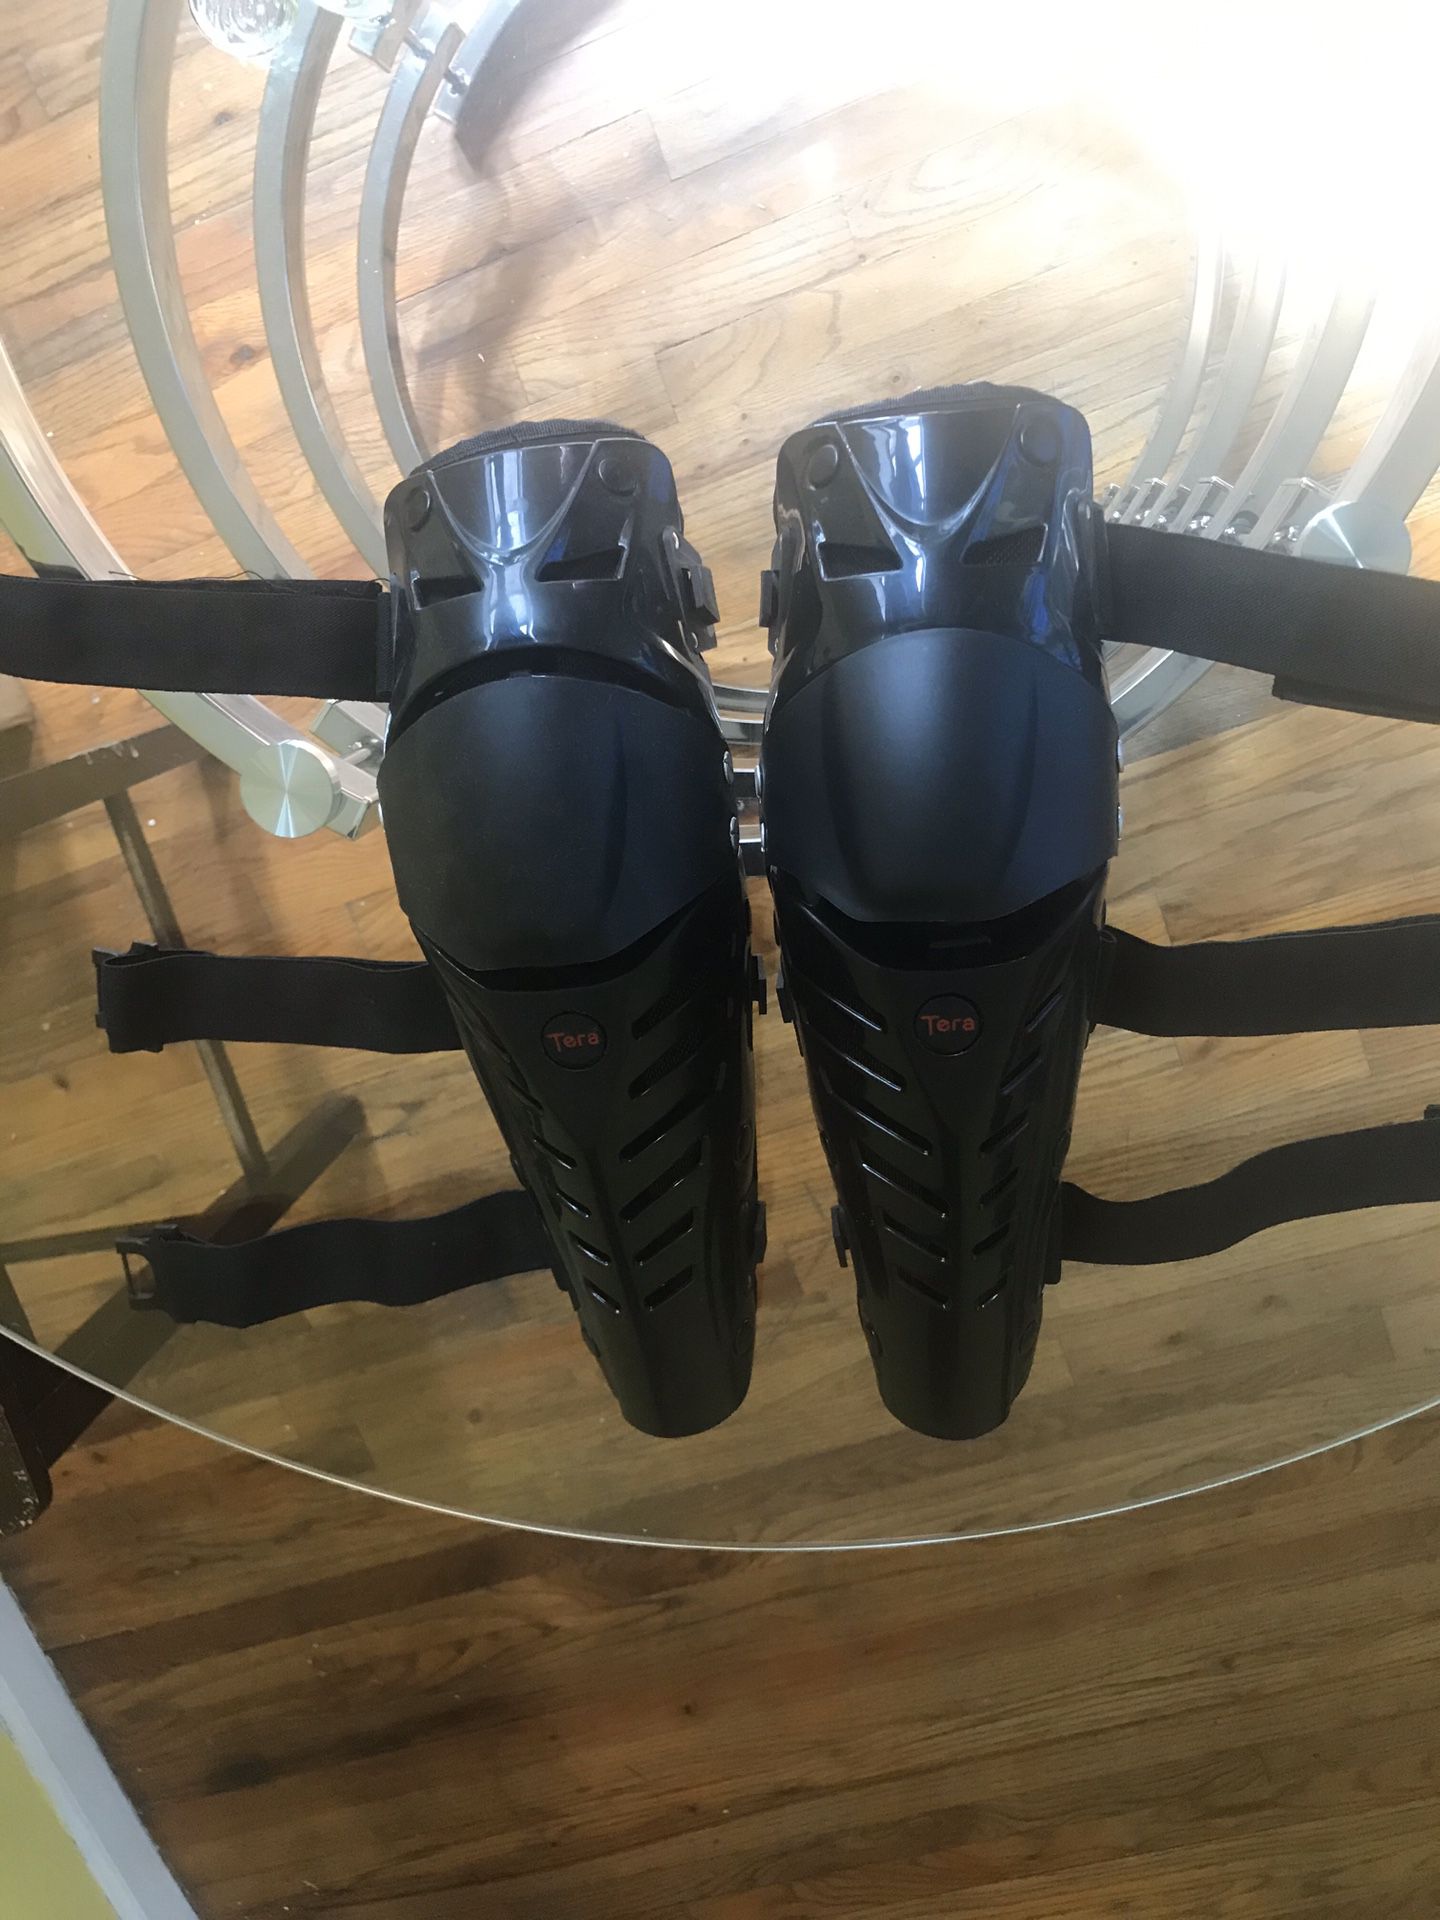 Tera motorcycle gear knee and chin protectors